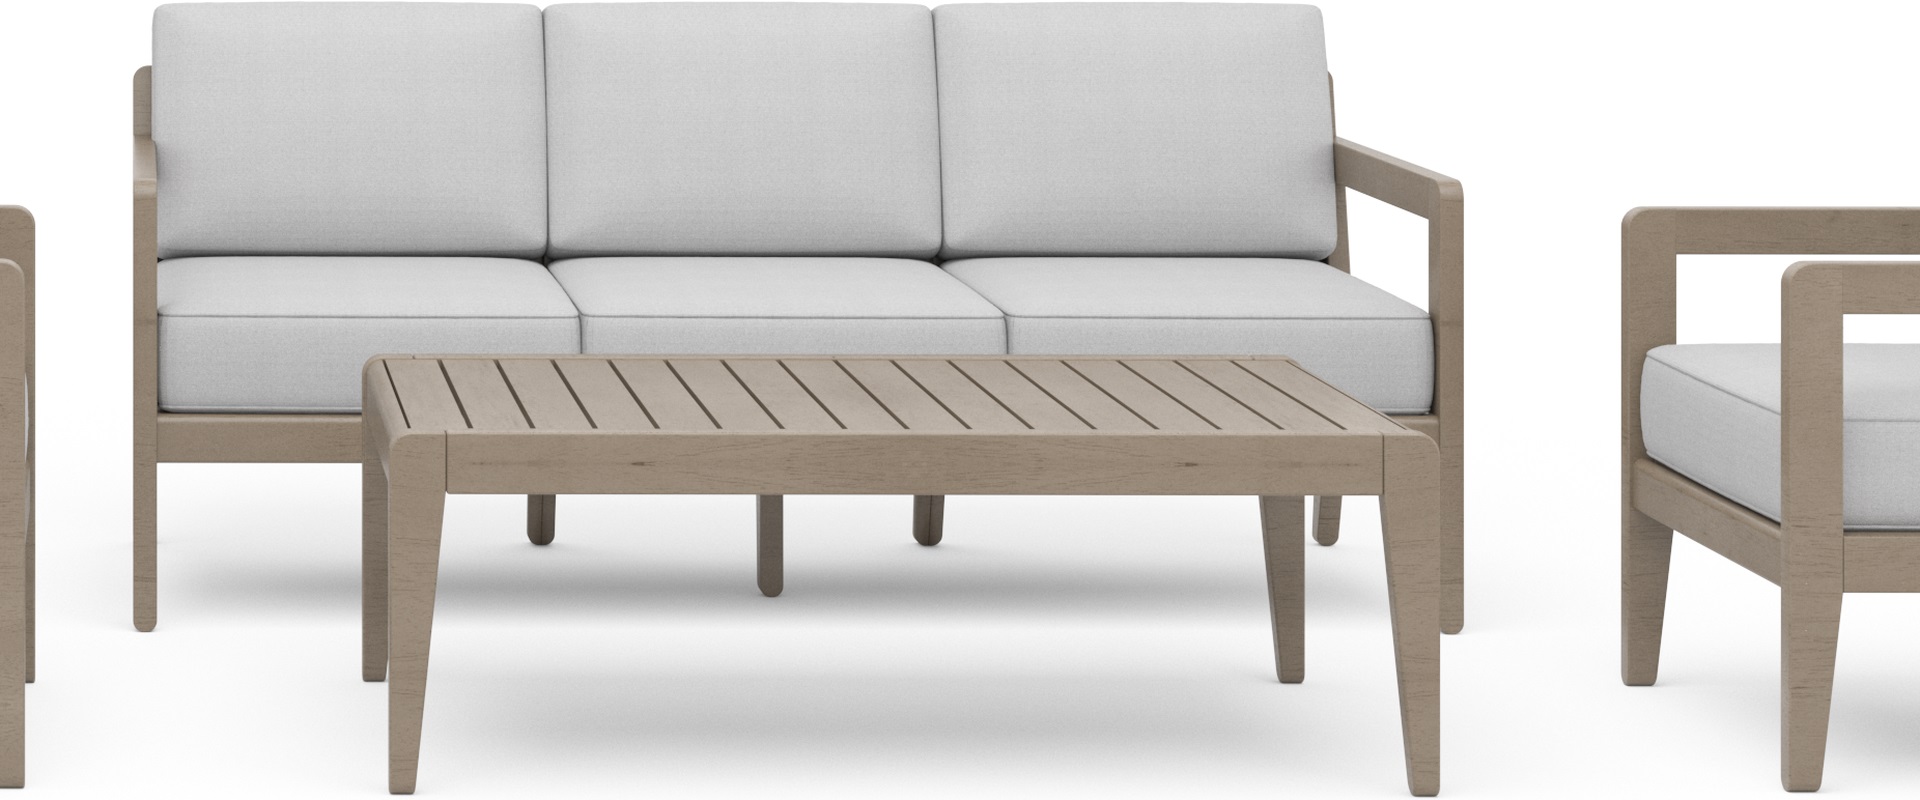 Transitional Outdoor 4-Piece Sofa Set